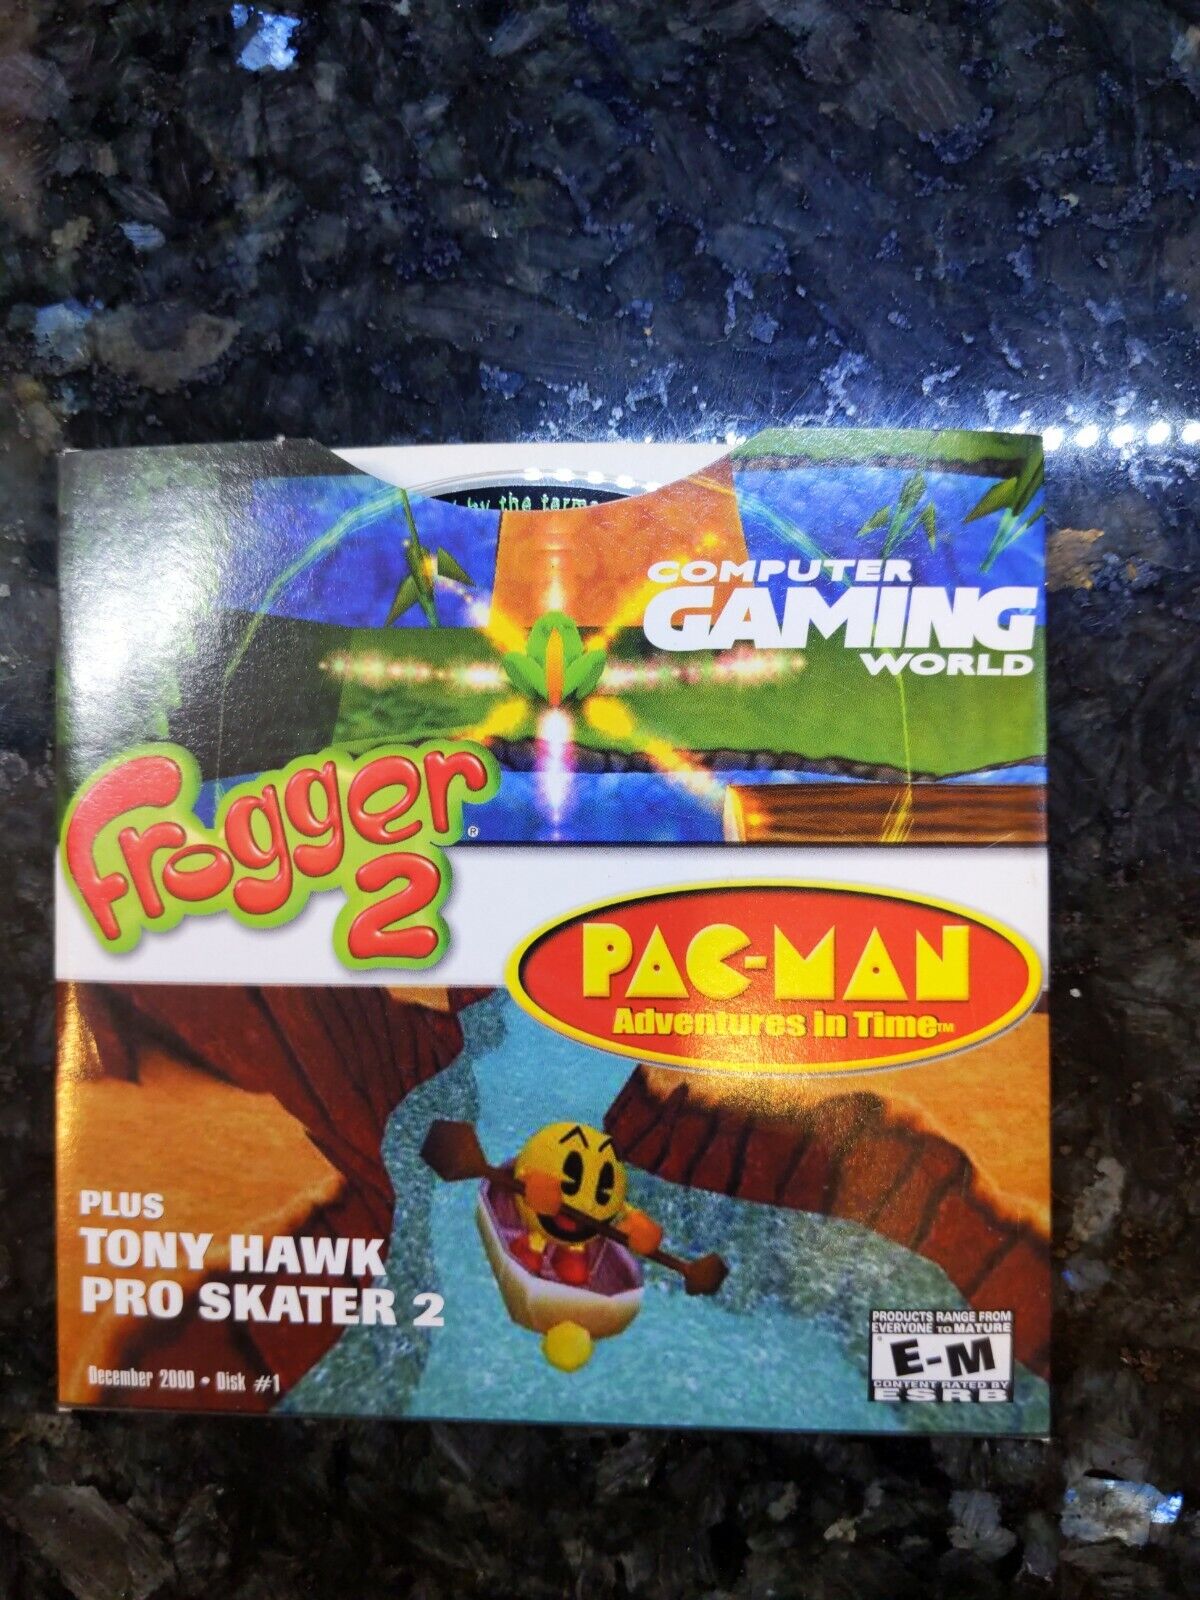 Computer Gaming World Dec. Disk #1 Frogger 2,Tony Hawk 2,Pac-Man Adv. PC CD ROM